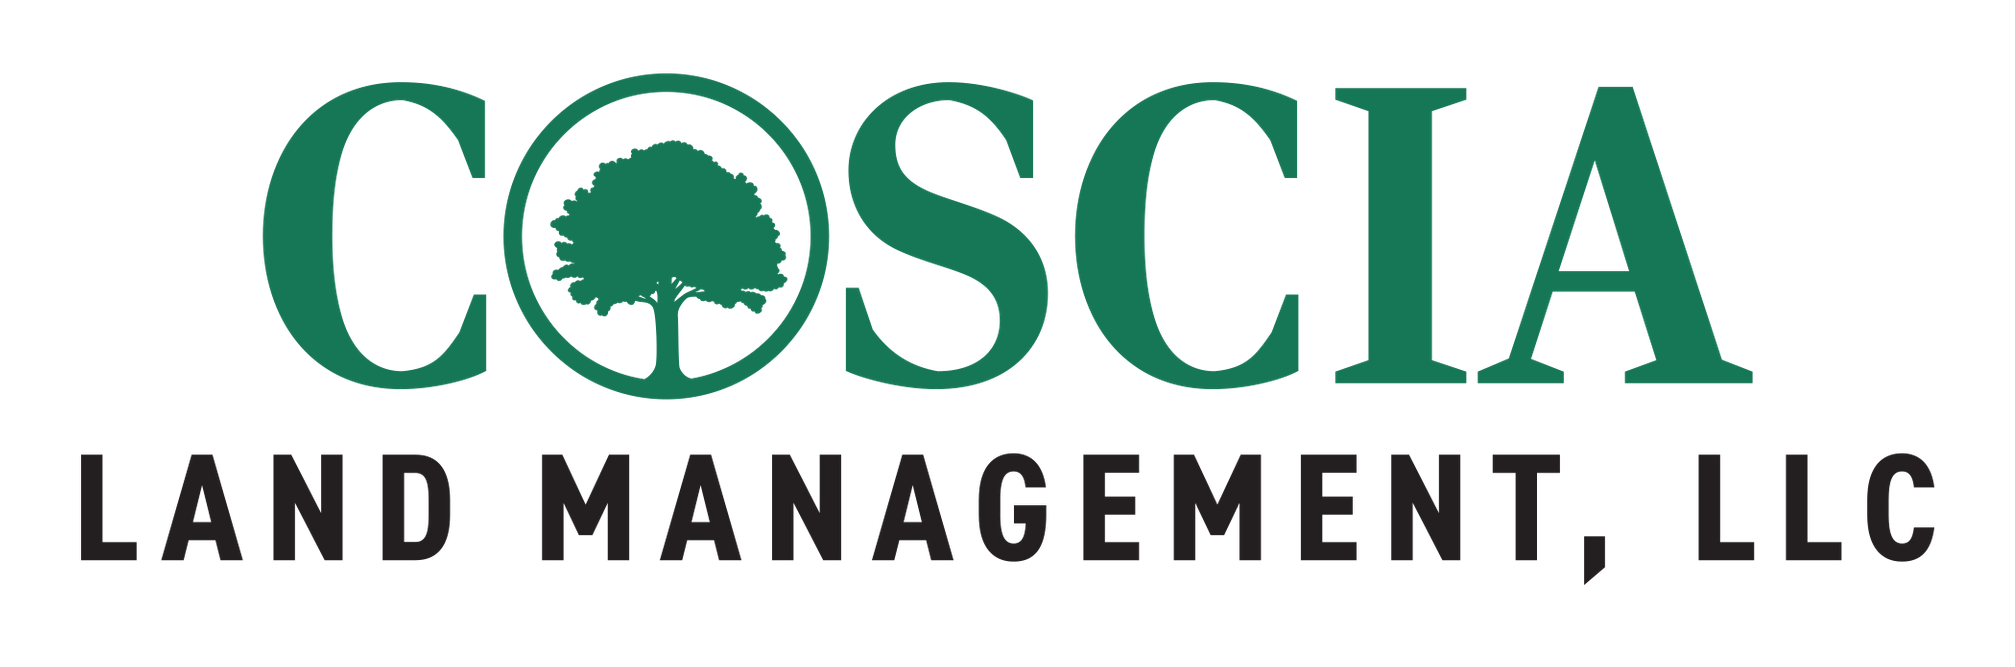 Coscia Land Logo.png